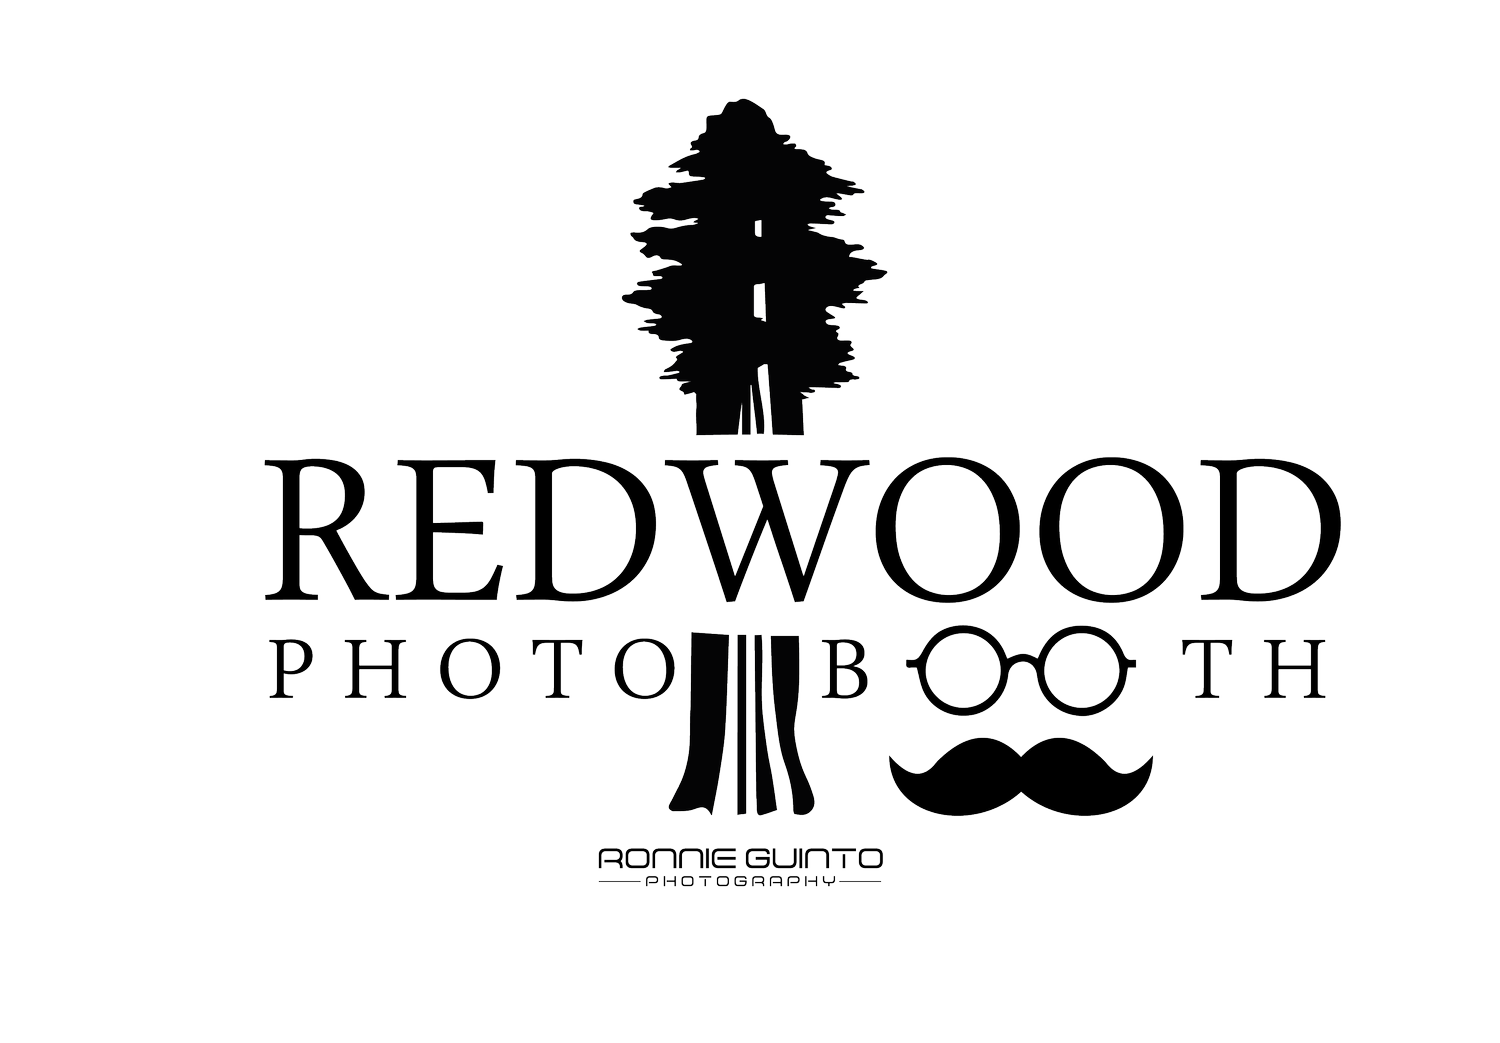 Redwood Photo Booth